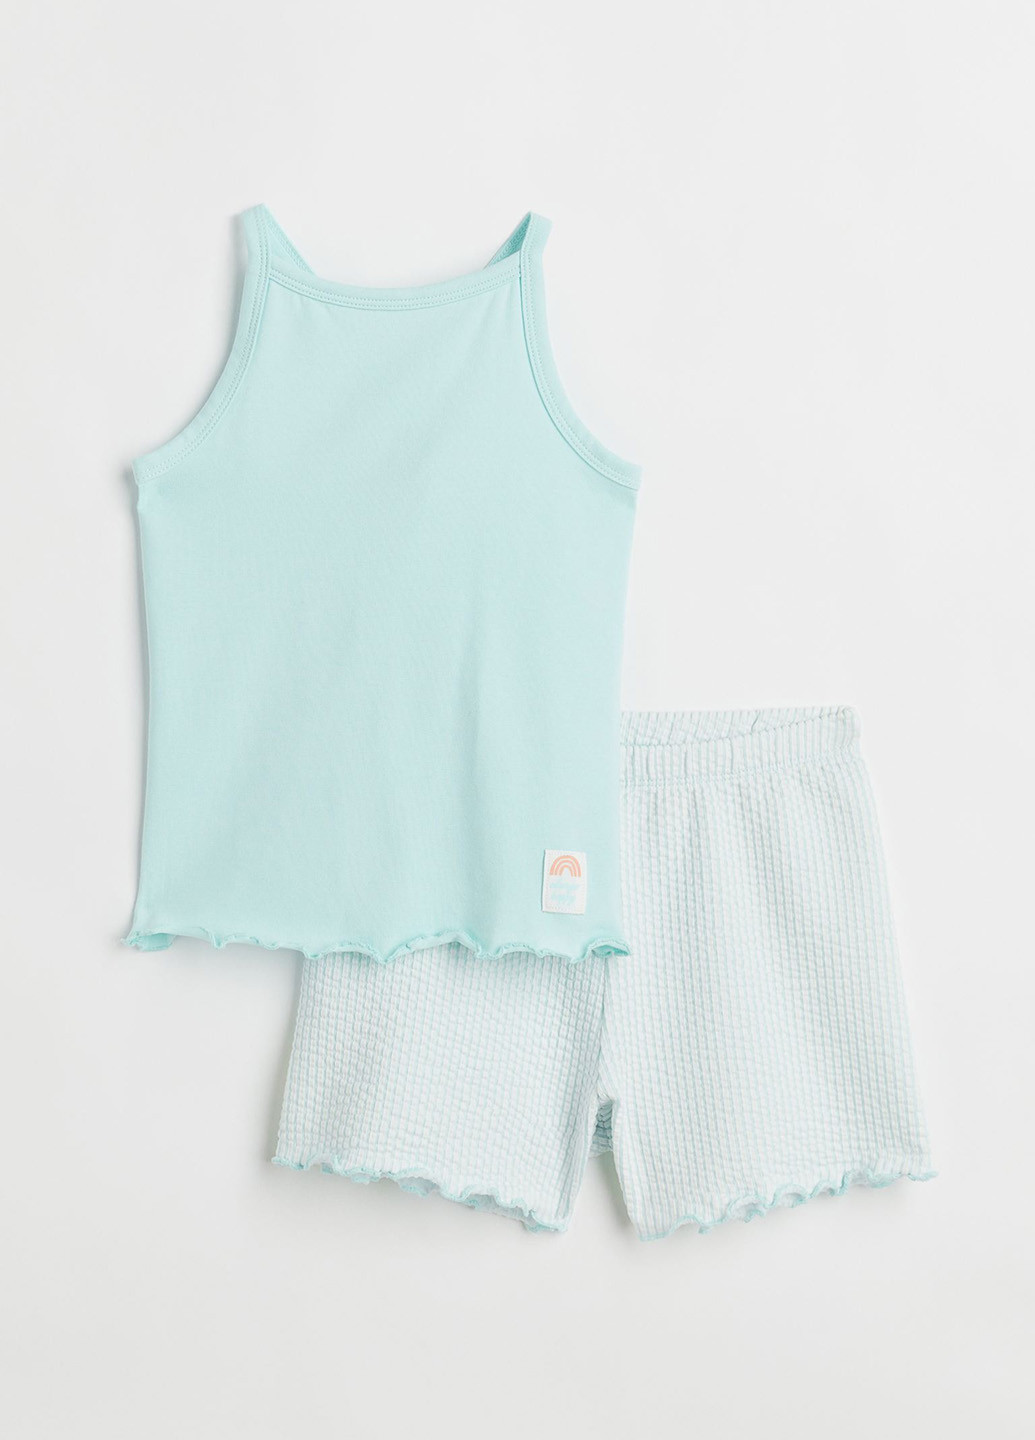 Мятная всесезон пижама (майка, шорты) майка + шорты H&M